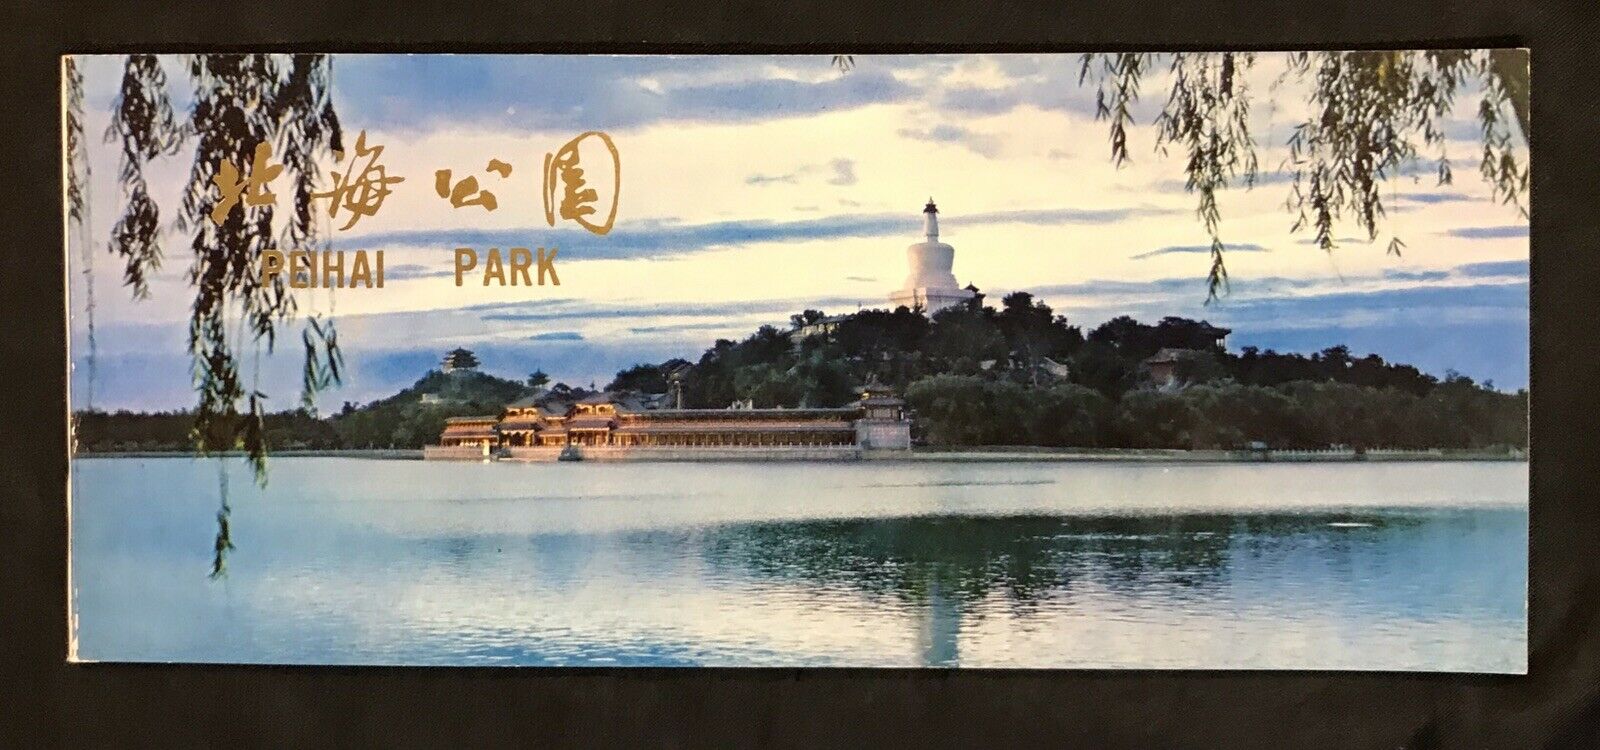 中国明信片 北海公園 China postcard booklet on Peihai Park